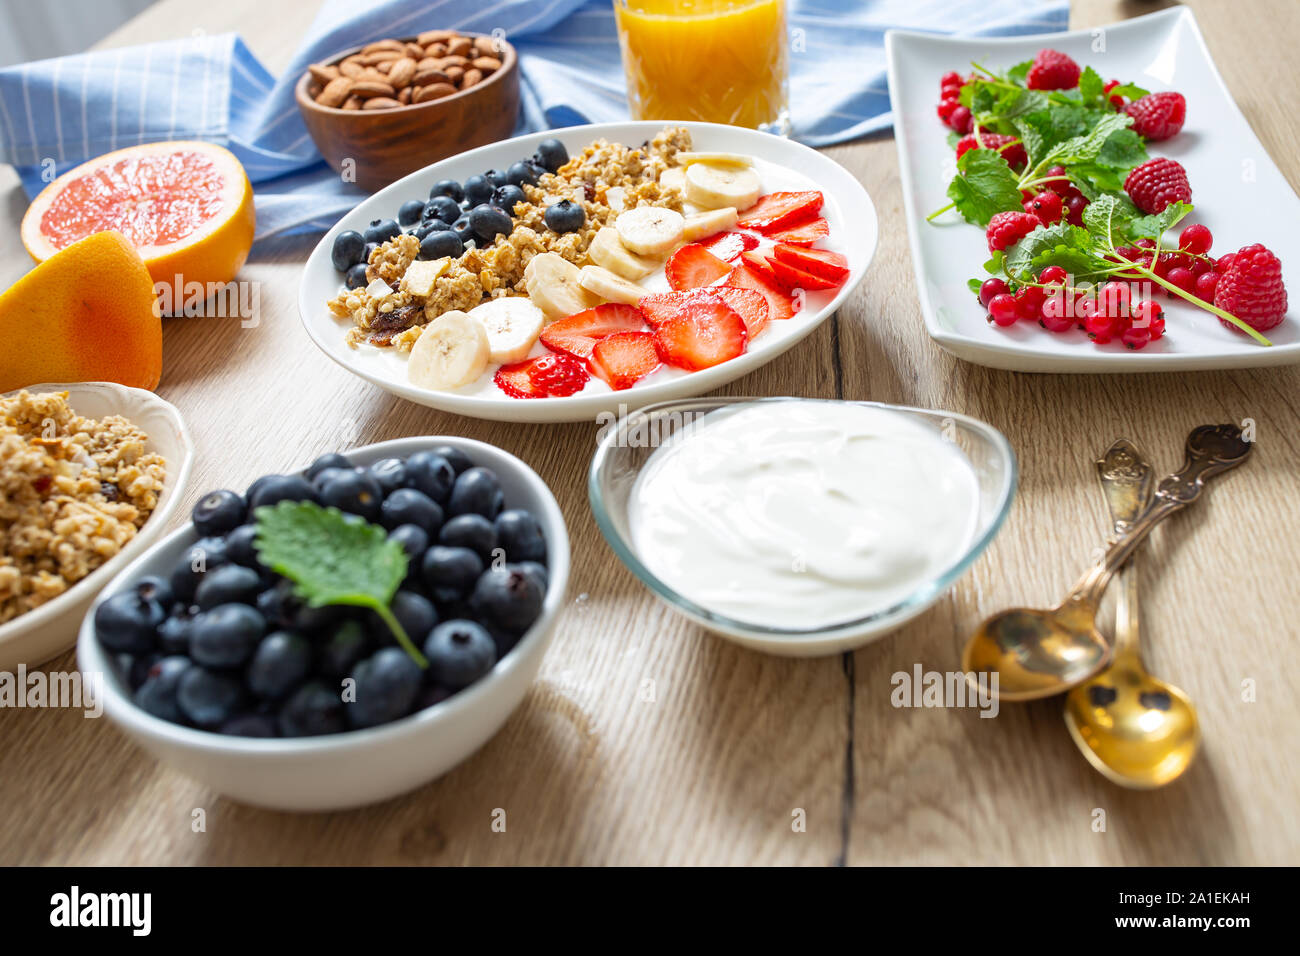 Healthy breakfast served with plate of yogurt muesli blueberries strawberries and banana. Stock Photo